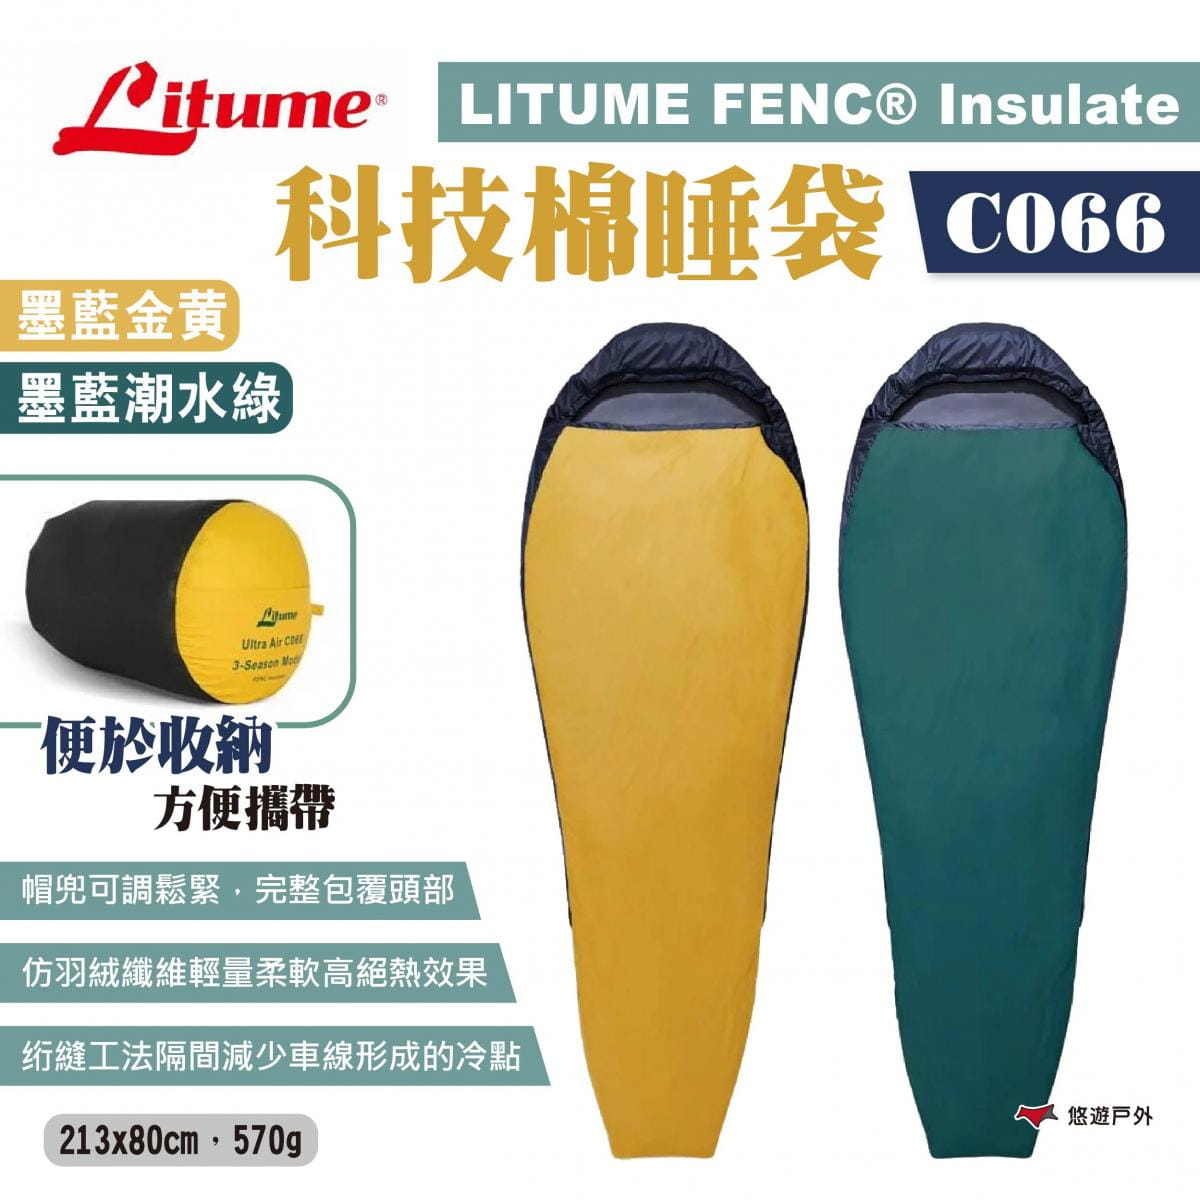 【LITUME】意都美 超輕量FENC®Insulate科技棉睡袋 C066 悠遊戶外 1